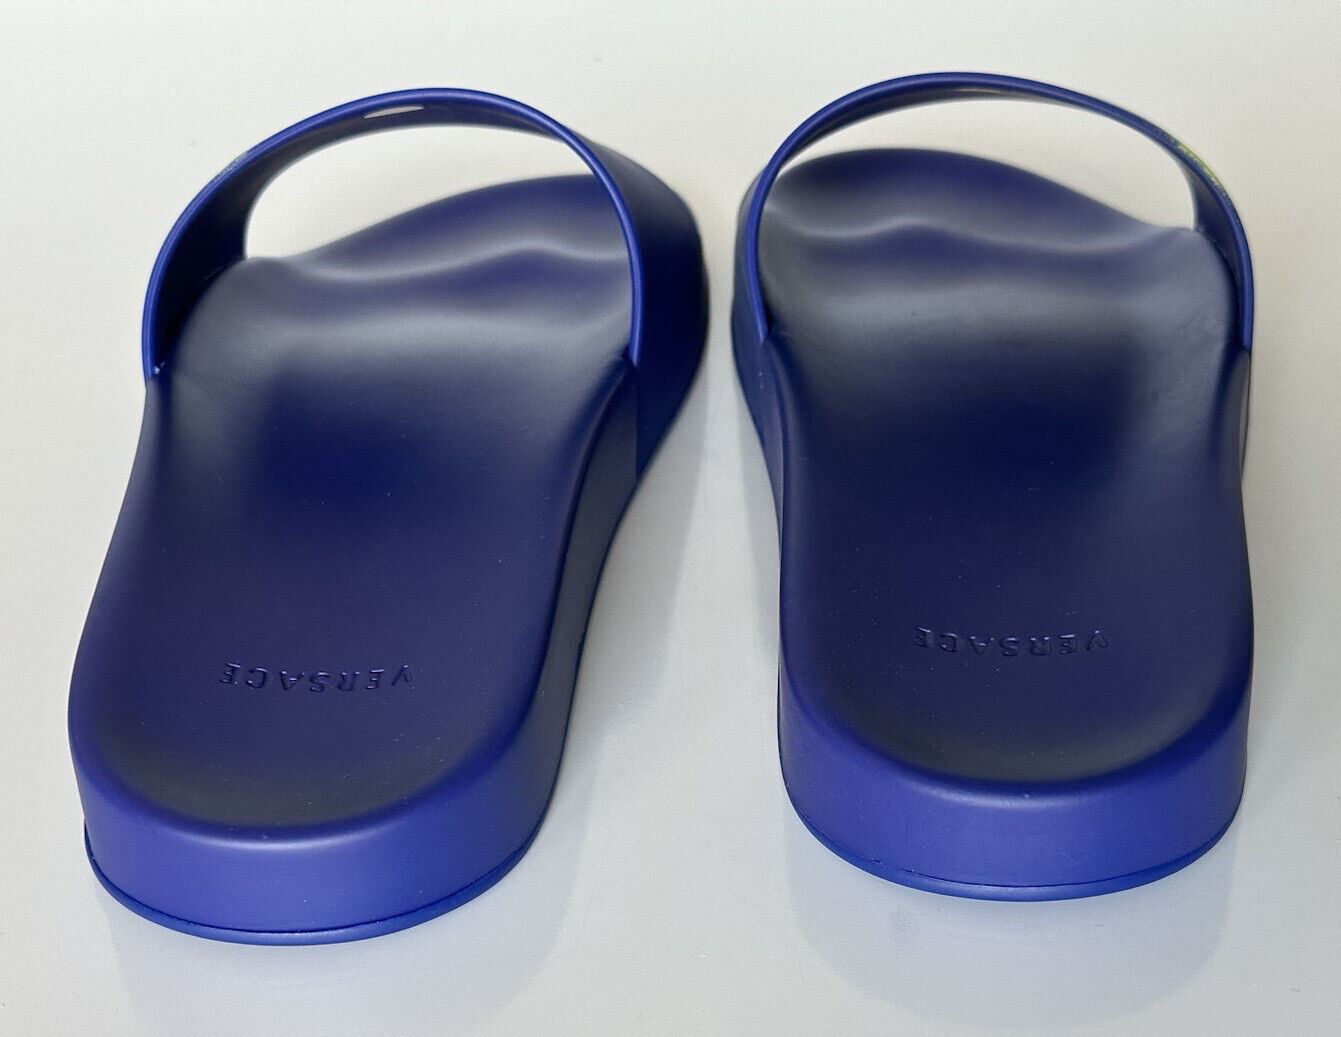 NIB $ 450 Versace Smiley Medusa Slides Sandalen Blau/Limette 10 US (43 Eu) DSU6516 IT 